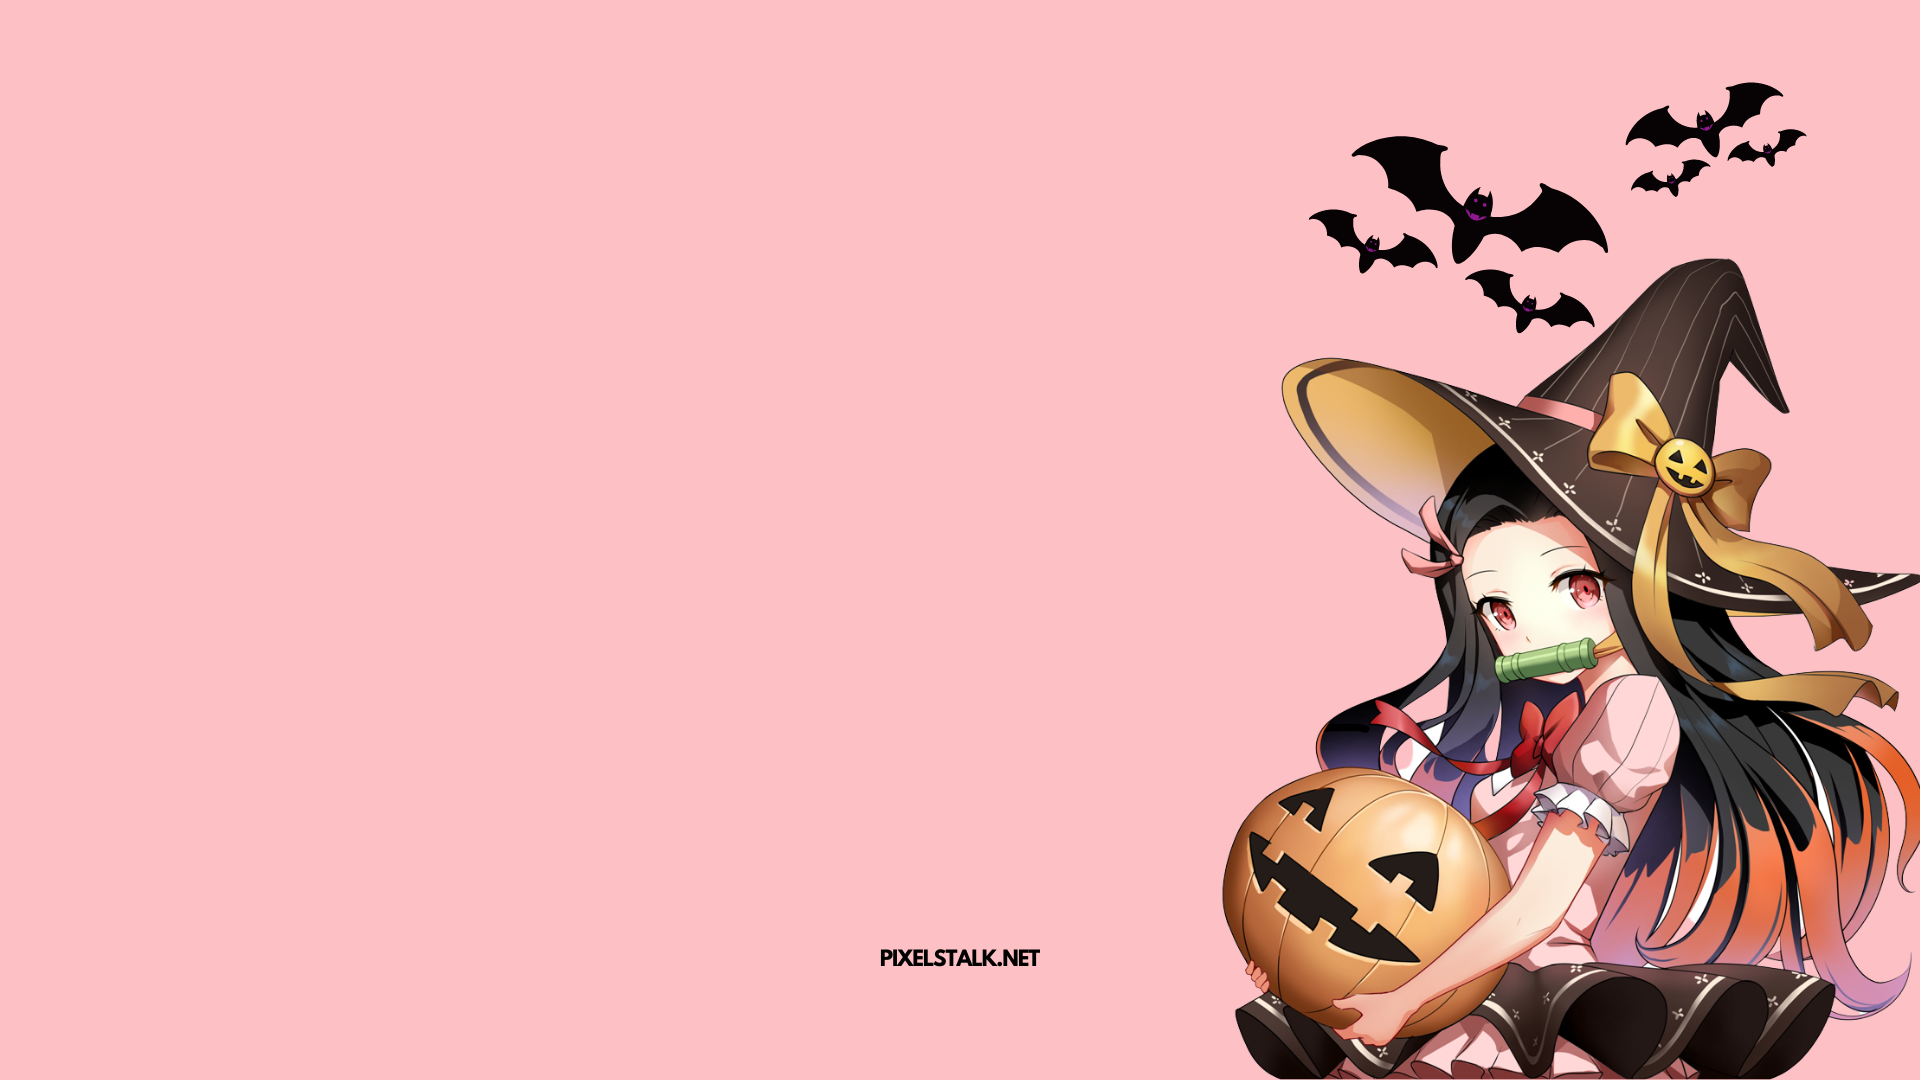 Anime Halloween Wallpaper HD Free Download